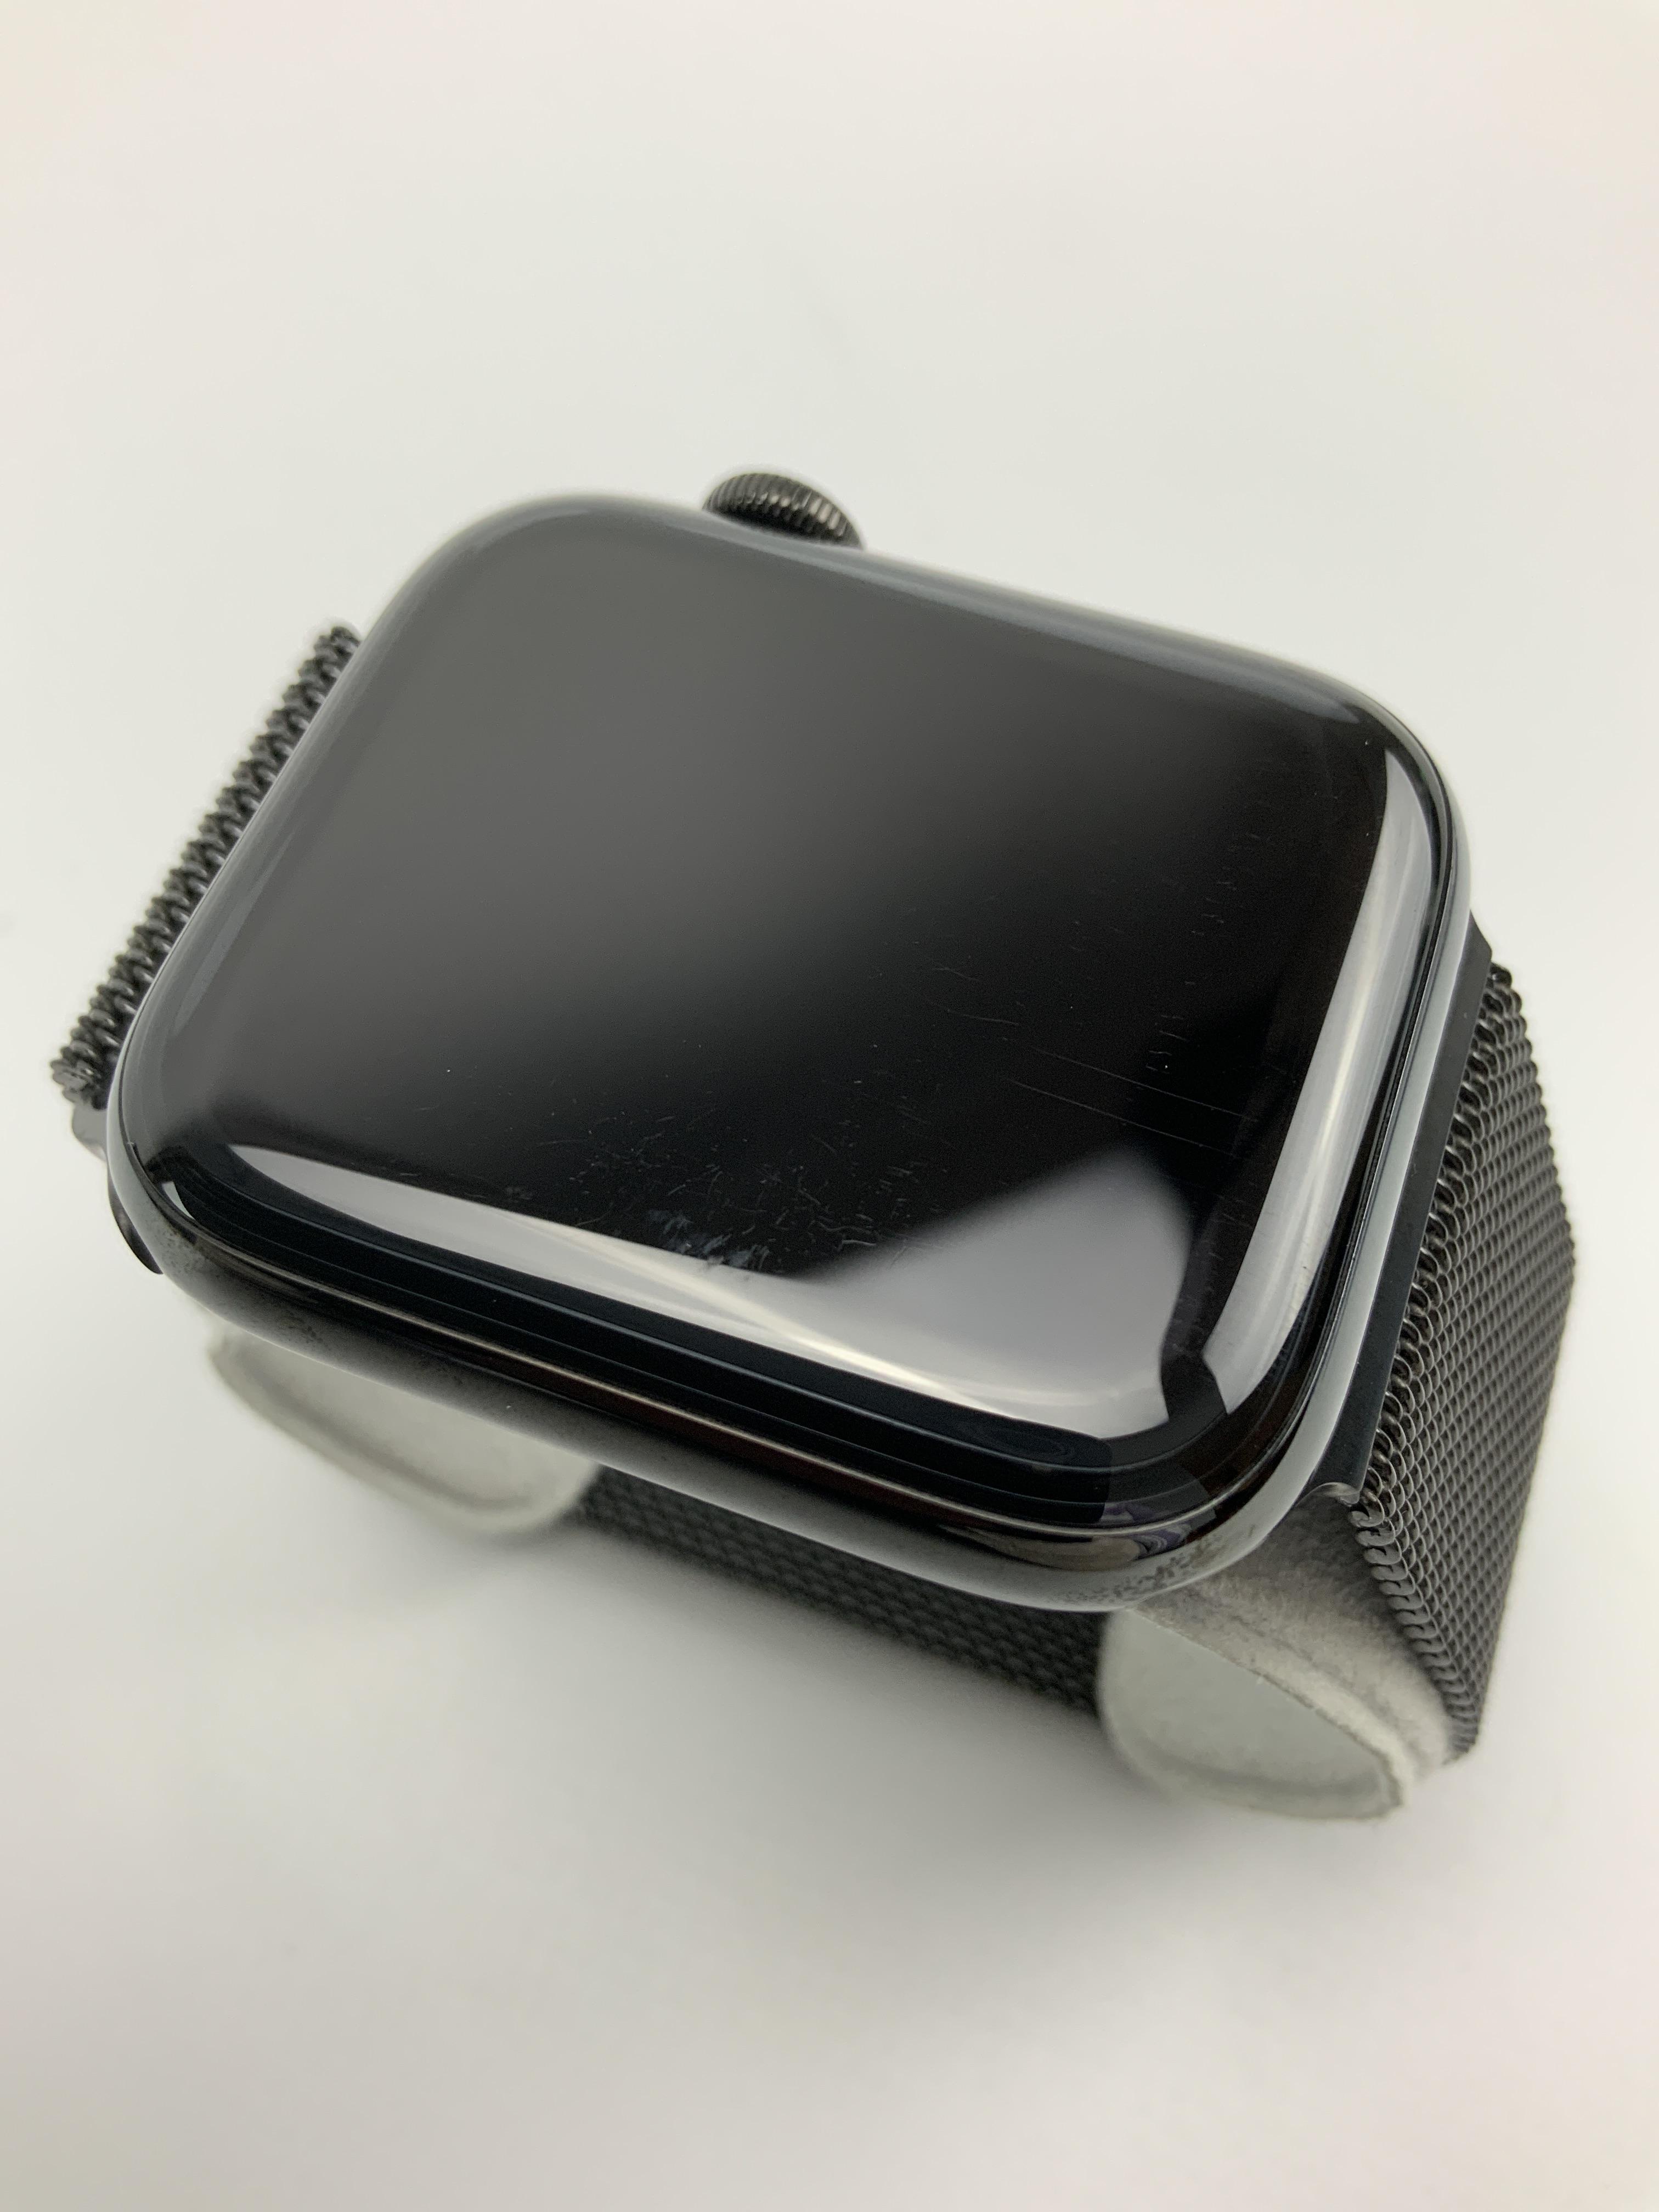 Watch Series 5 Steel Cellular (44mm), Space Black, immagine 2